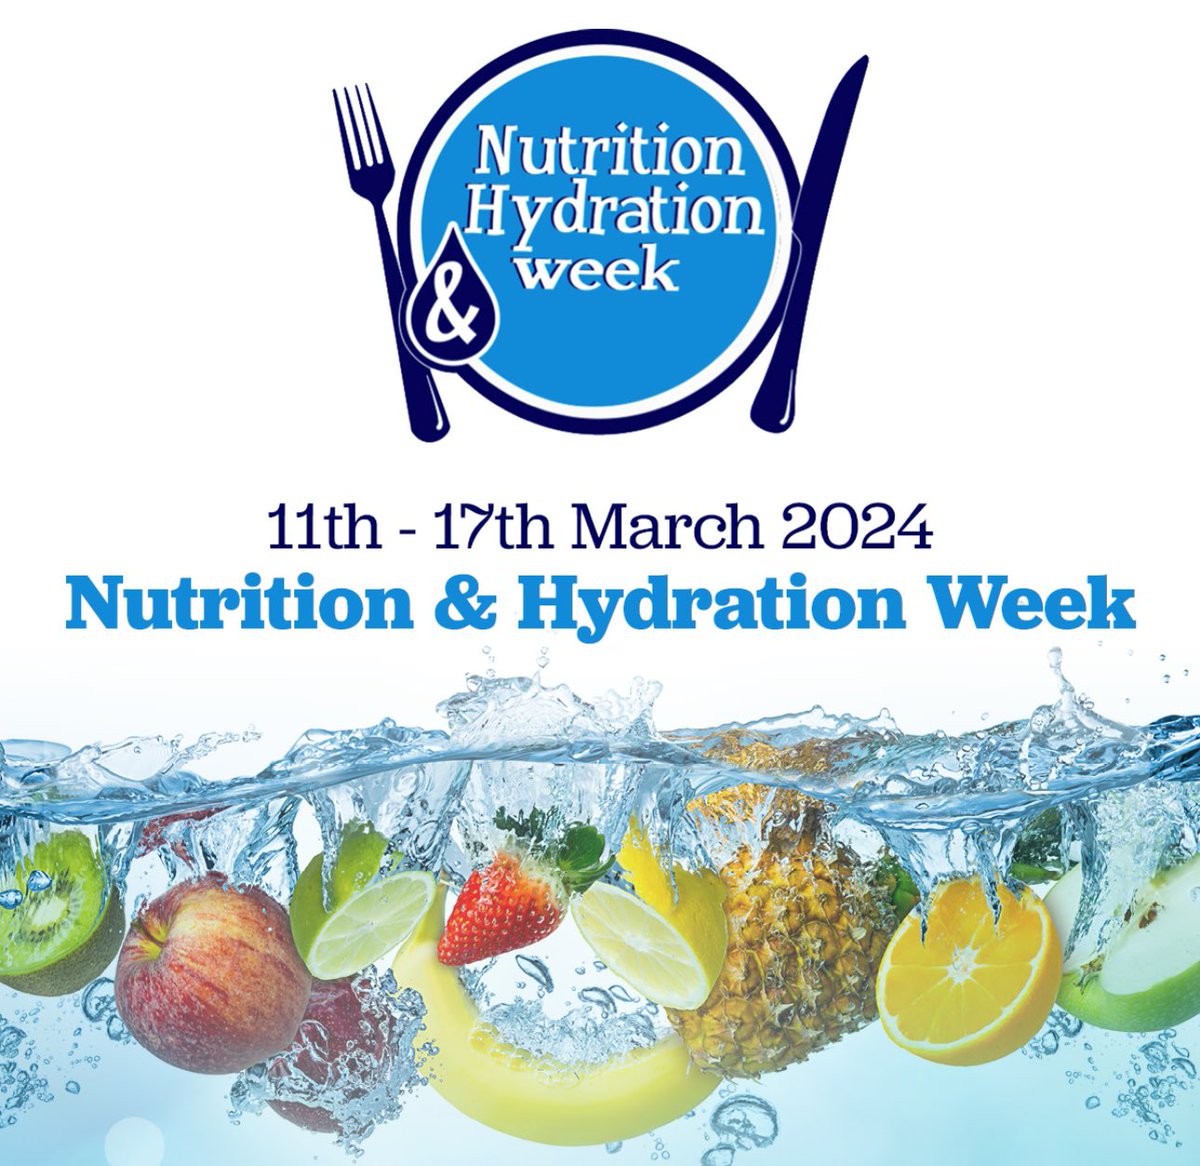 Starting our Friday Morning off with fresh fruit following on from Wednesday’s Nutrition & Hydration Session 🫐🍉🍍🍓 @UpneetRiar @HelenCraigie7 @Georgina_gmmh @KiyaJade3